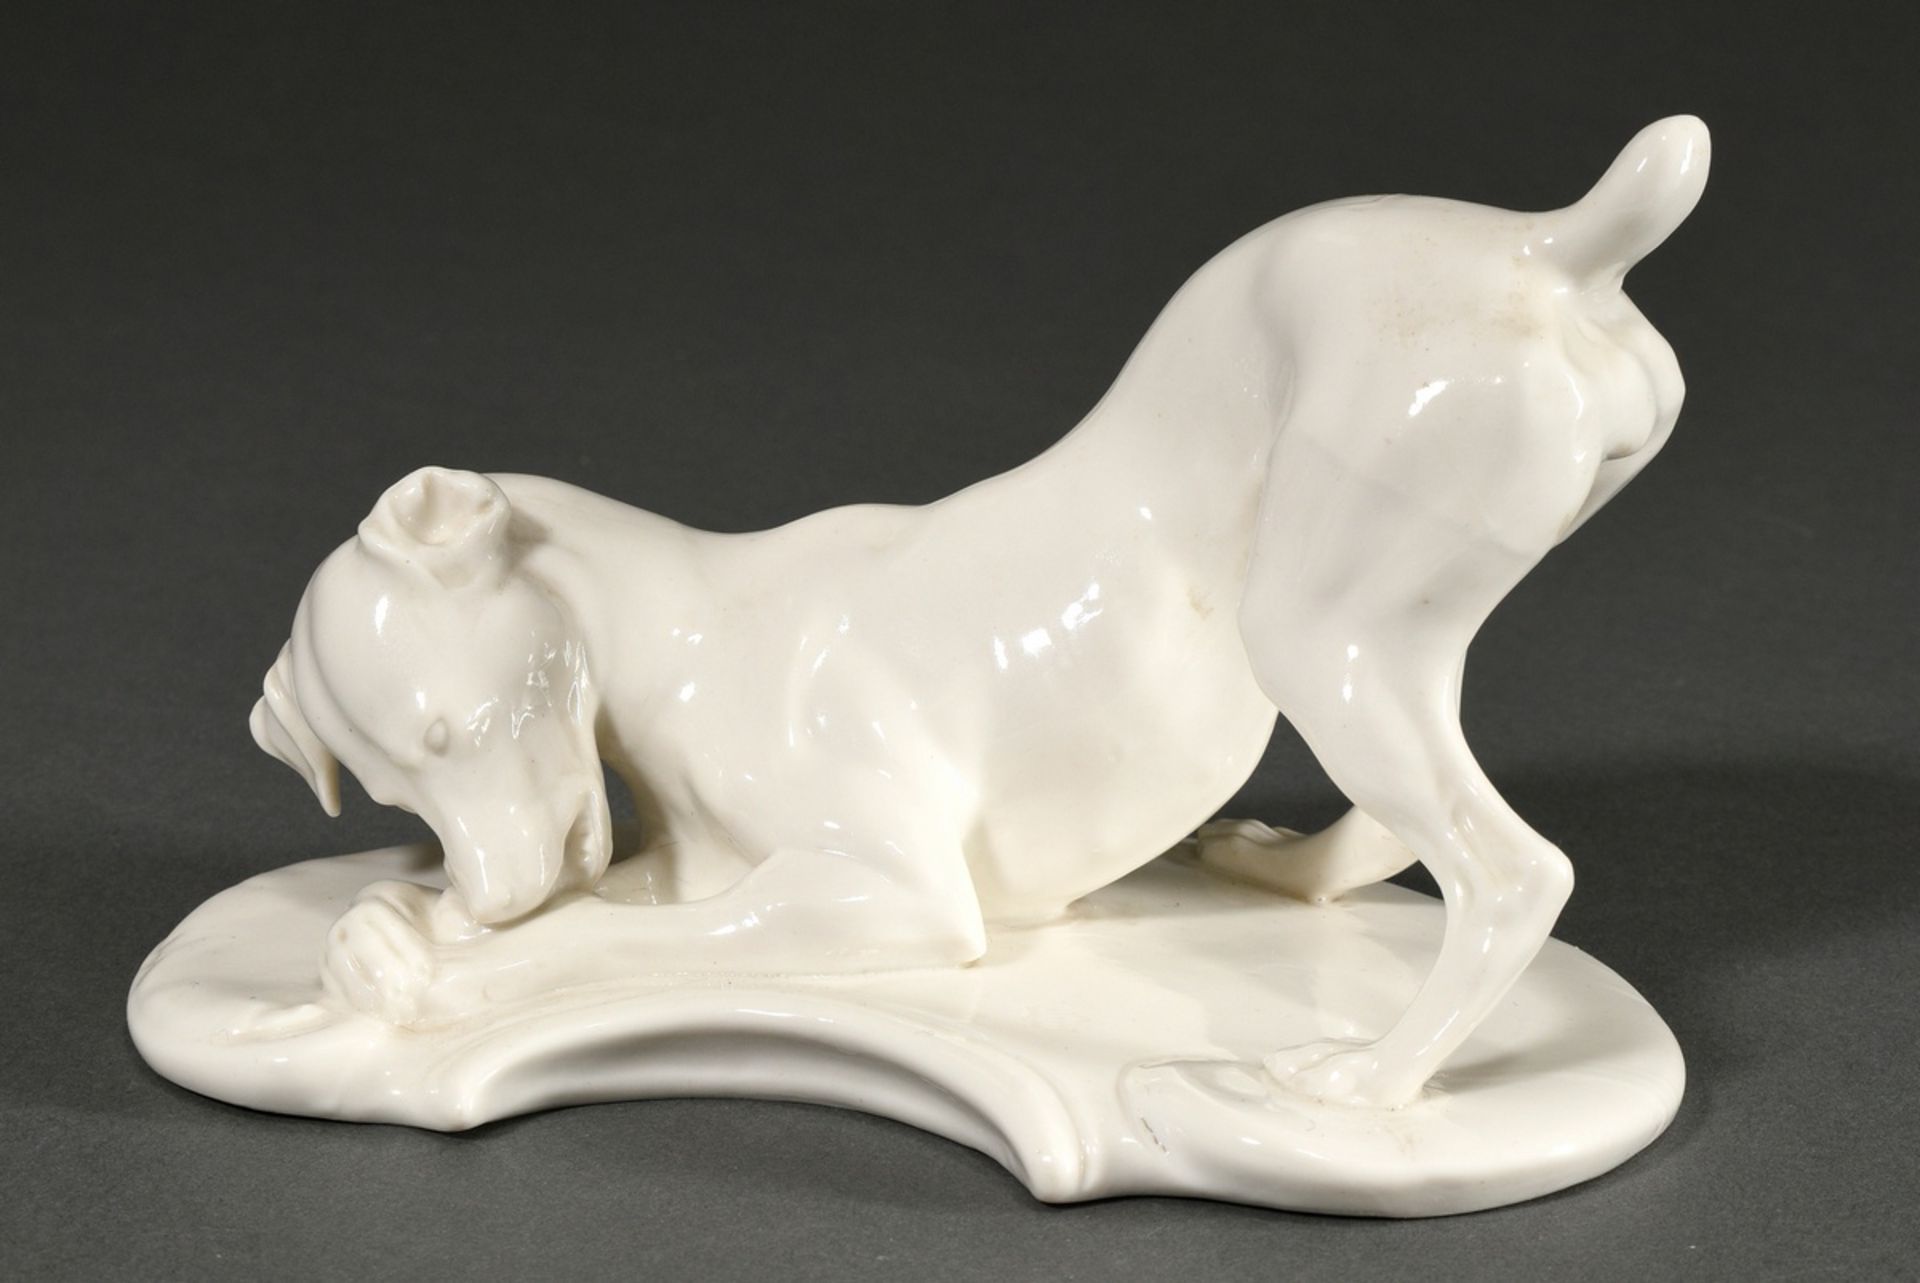 Nymphenburg figurine "Young Fox Terrier" 1913, designed by Theodor Kärner, 10x15.5x9.5cm